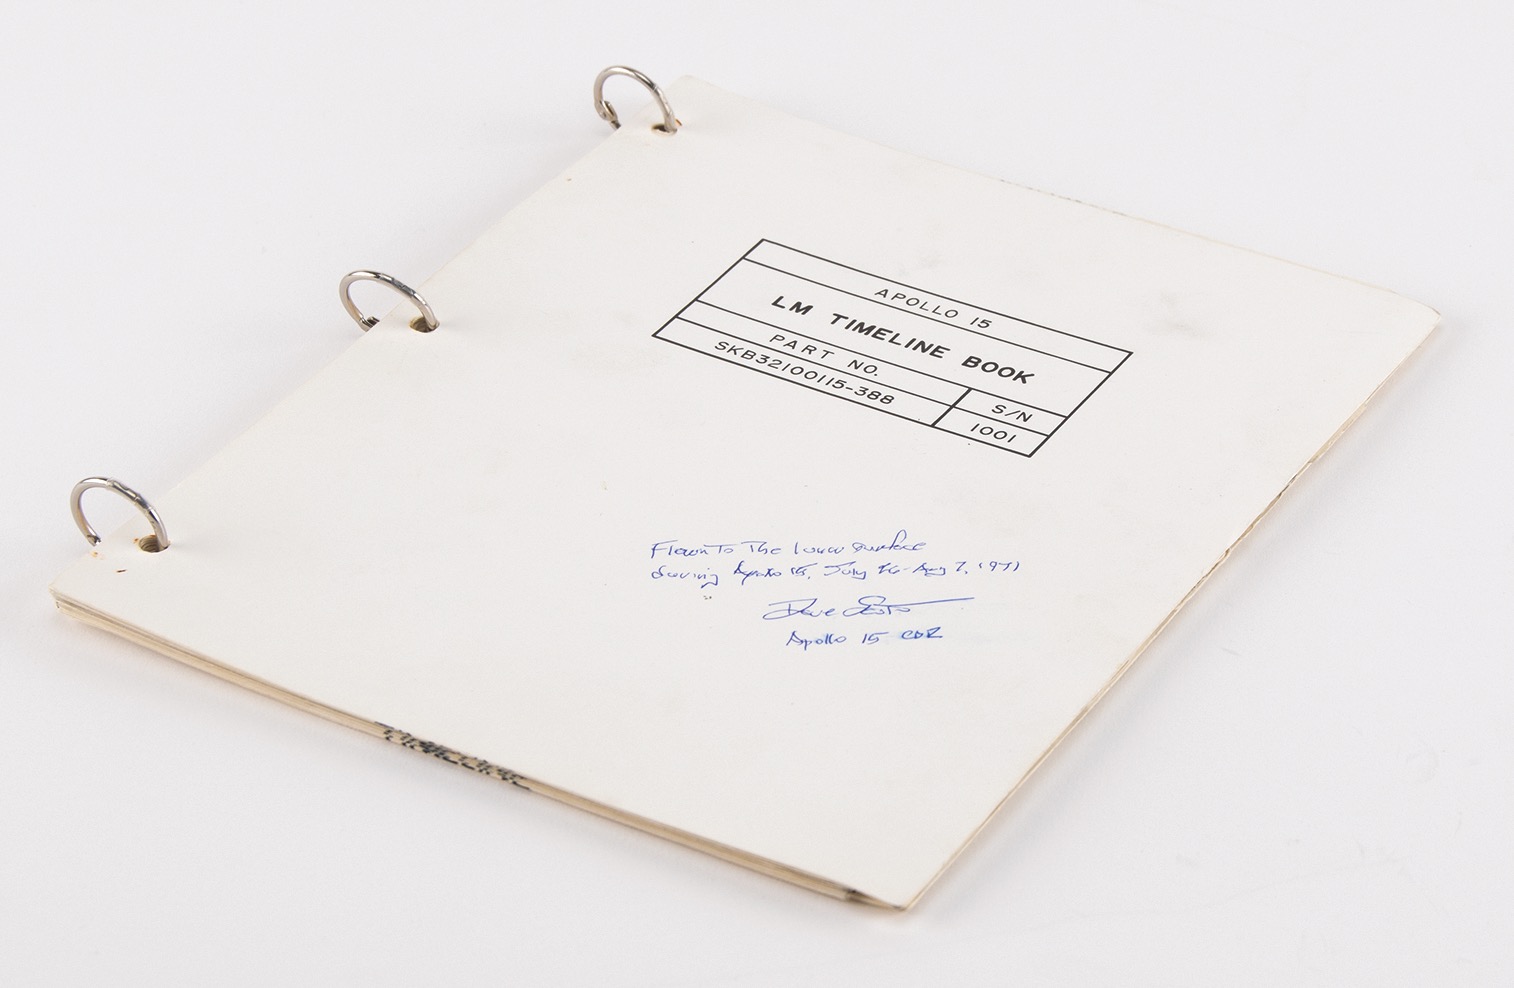 Lot #7901 Dave Scott's Apollo 15 Flown LM Timeline Book